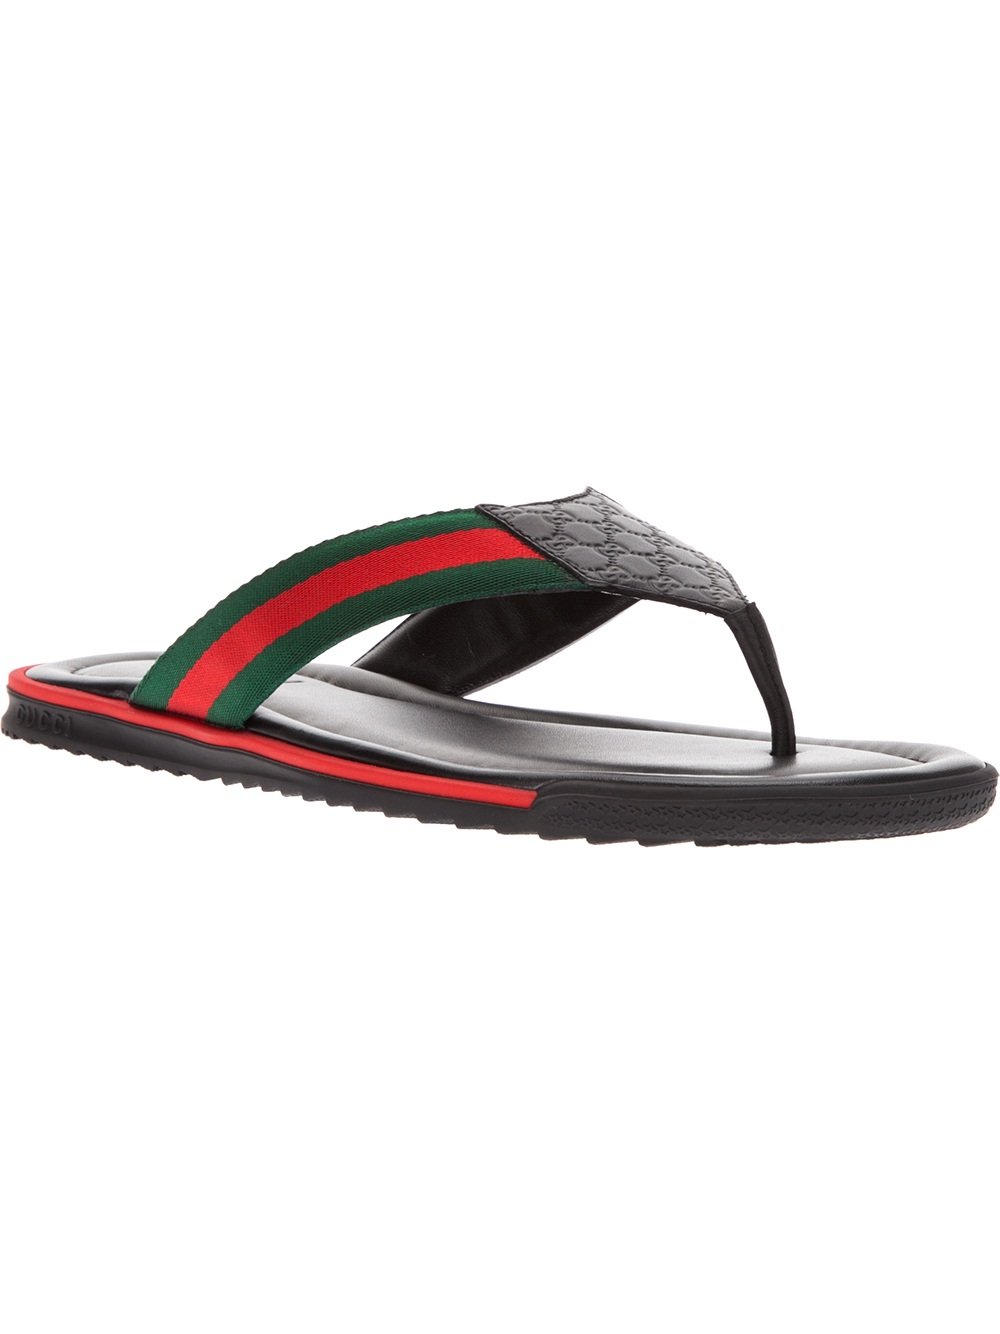 amazon gucci sandals